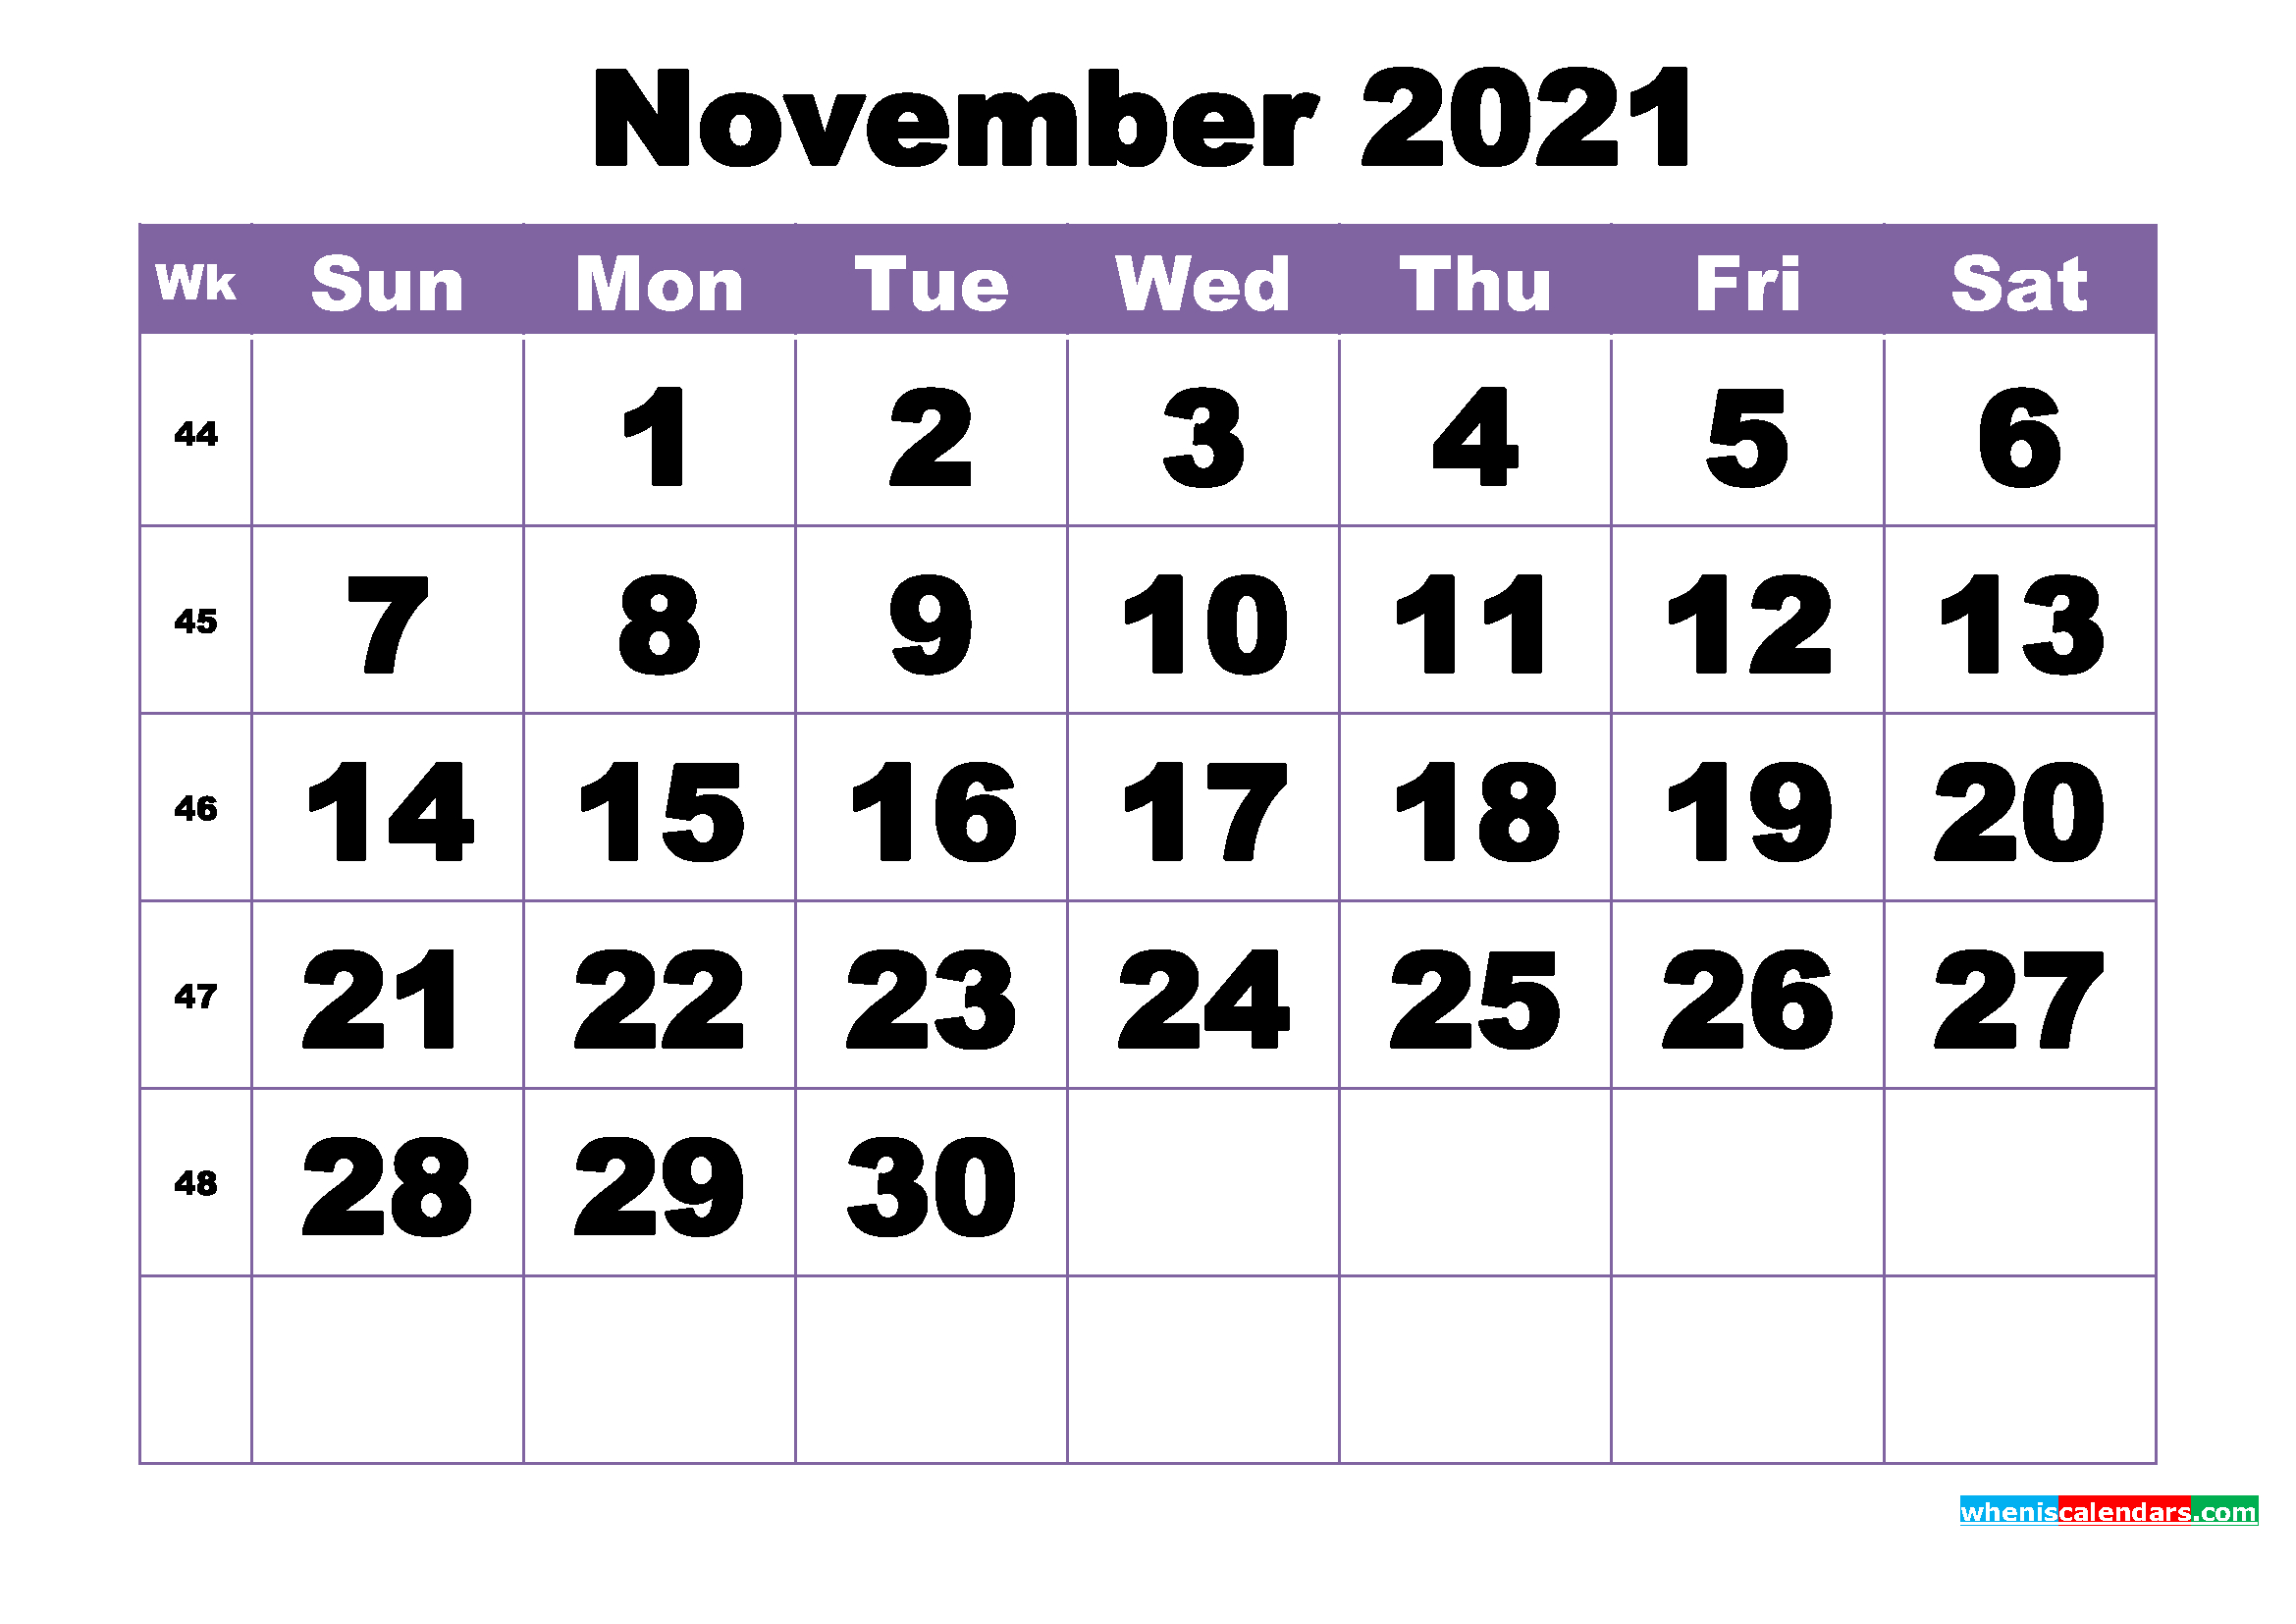 November 2021 Printable Calendar Template Calendar Of November 2021